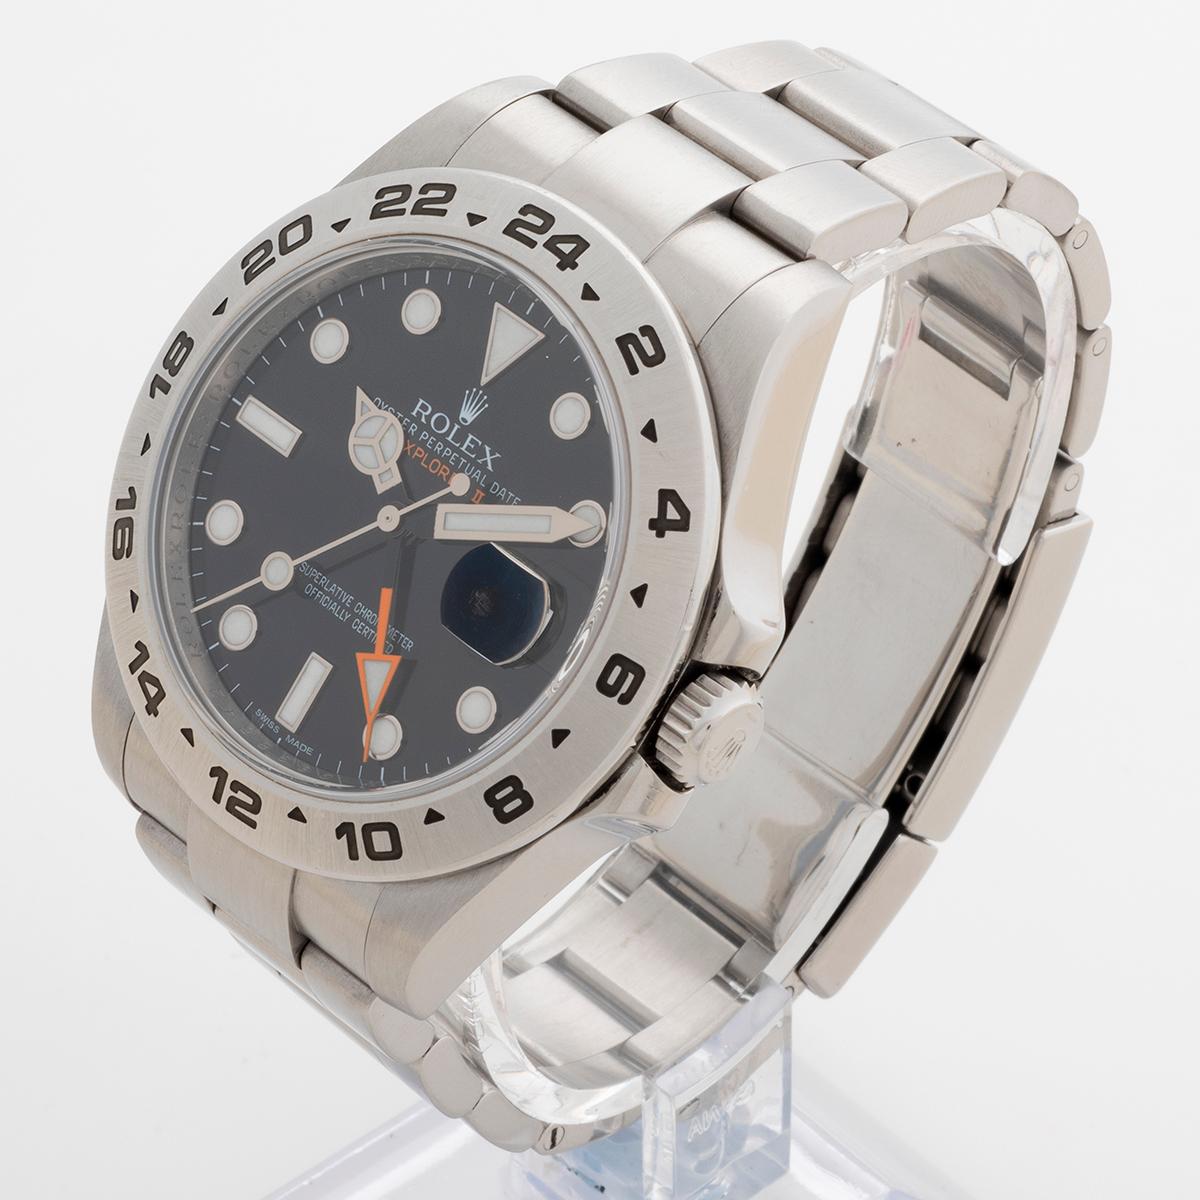 Women's or Men's Rolex Explorer II Wristwatch Ref 216570, 42mm Case, Stainless Steel, Year 2011